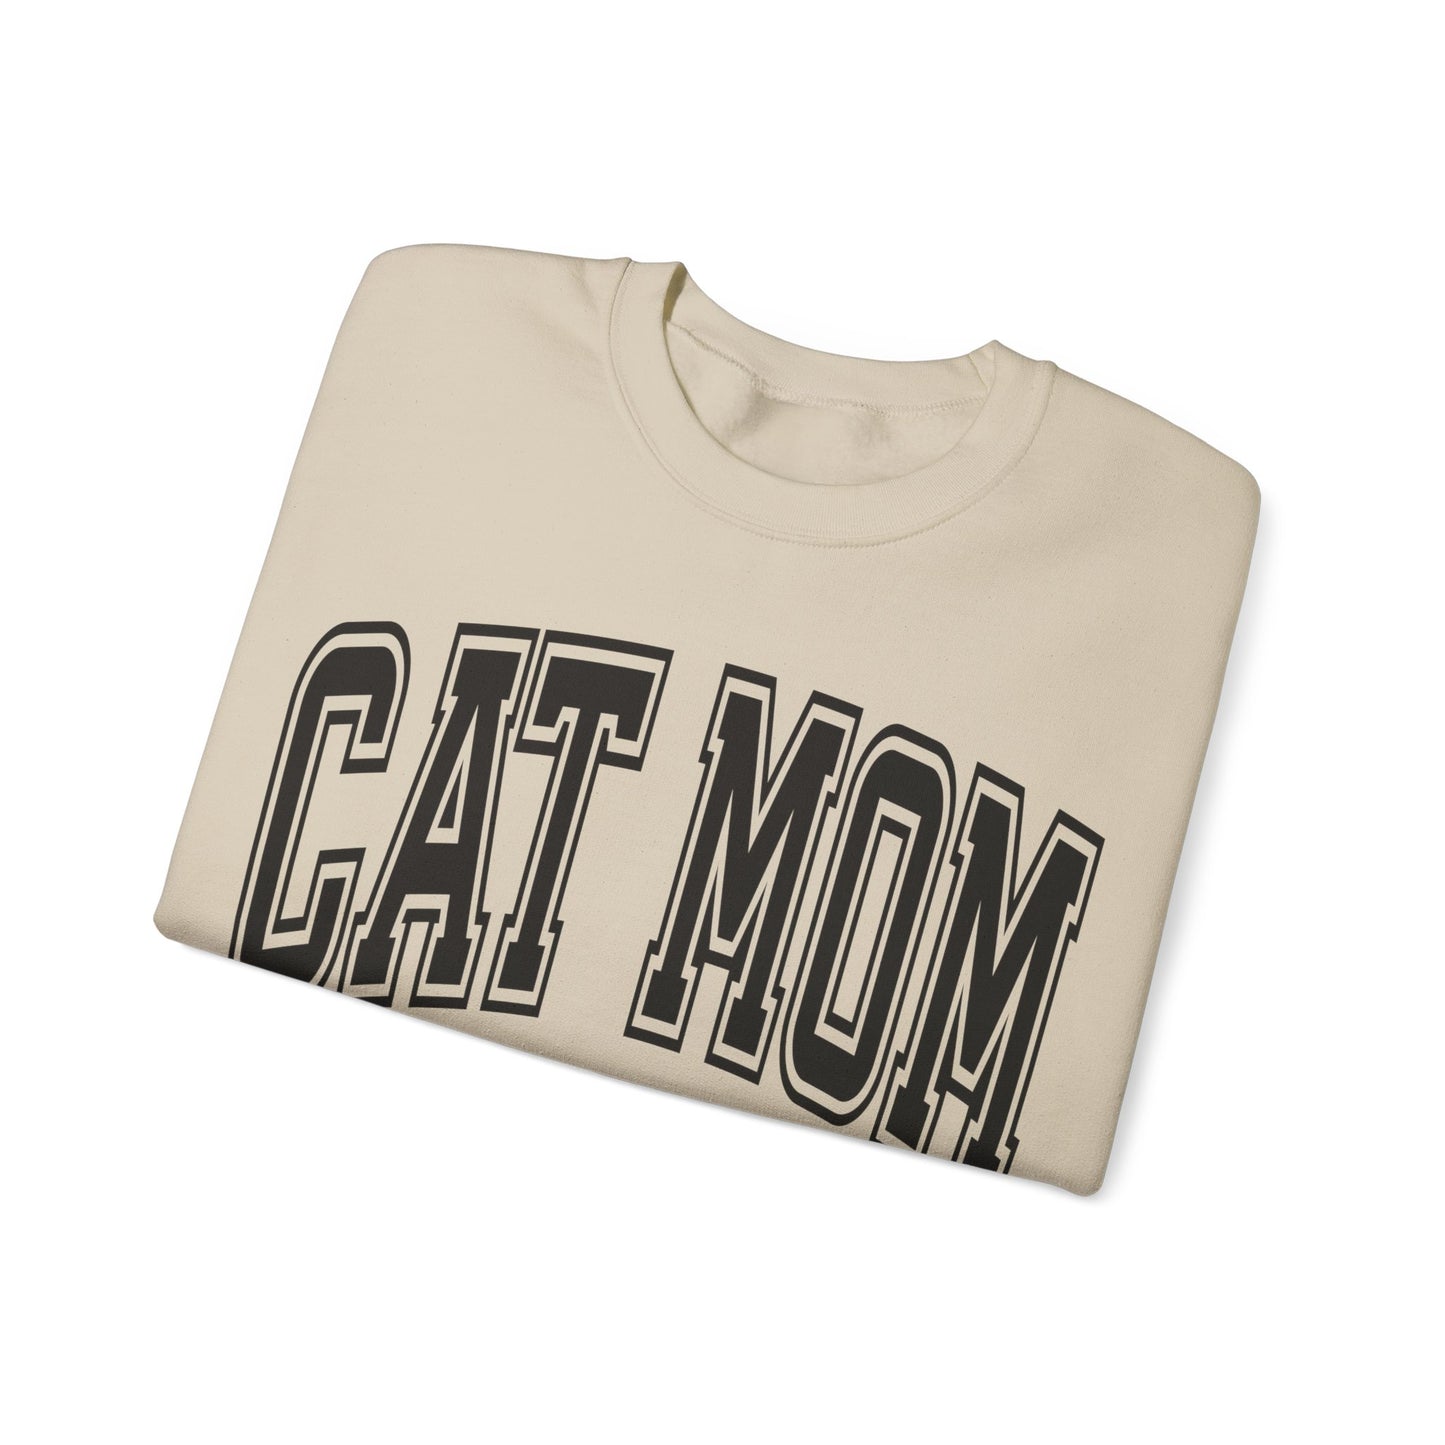 CAT MOM UNIVERSITY - Crewneck Sweatshirt